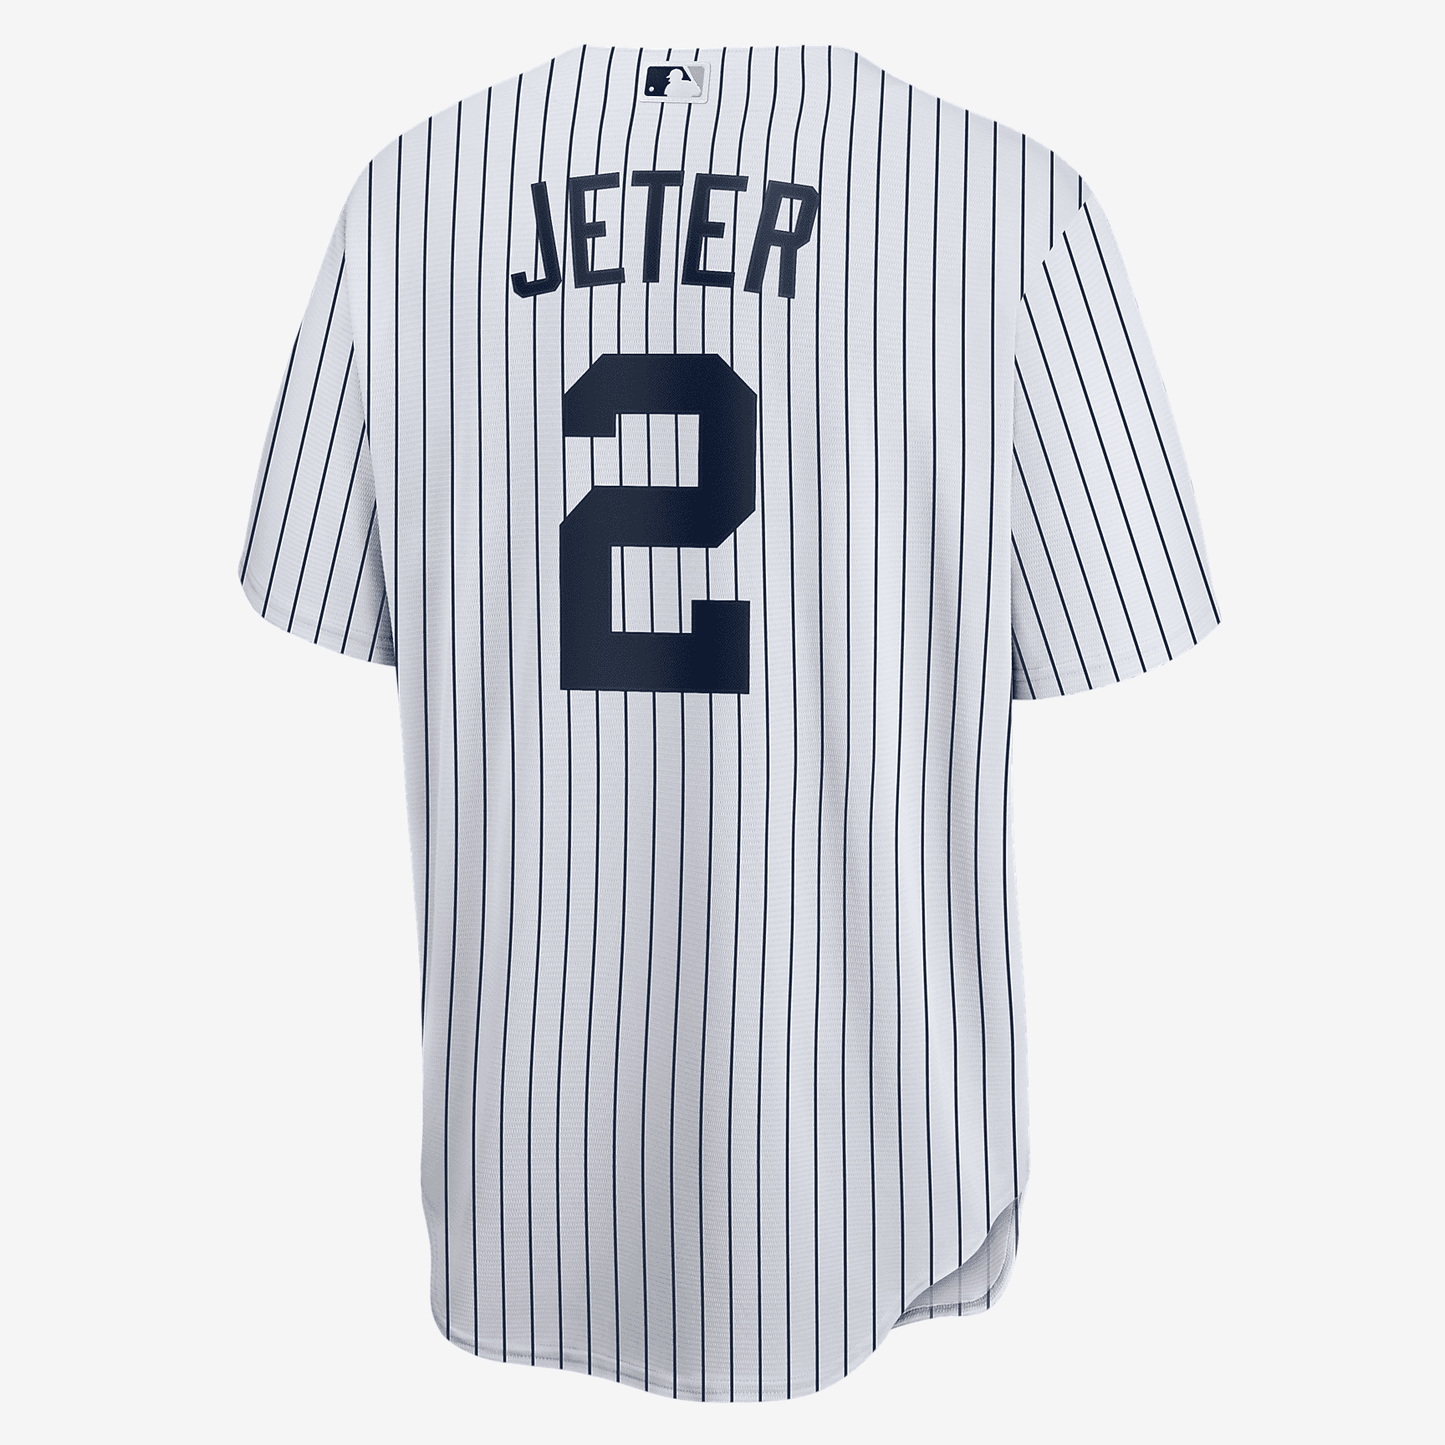 MLB New York Yankees (Derek Jeter) Men's Replica Baseball Jersey